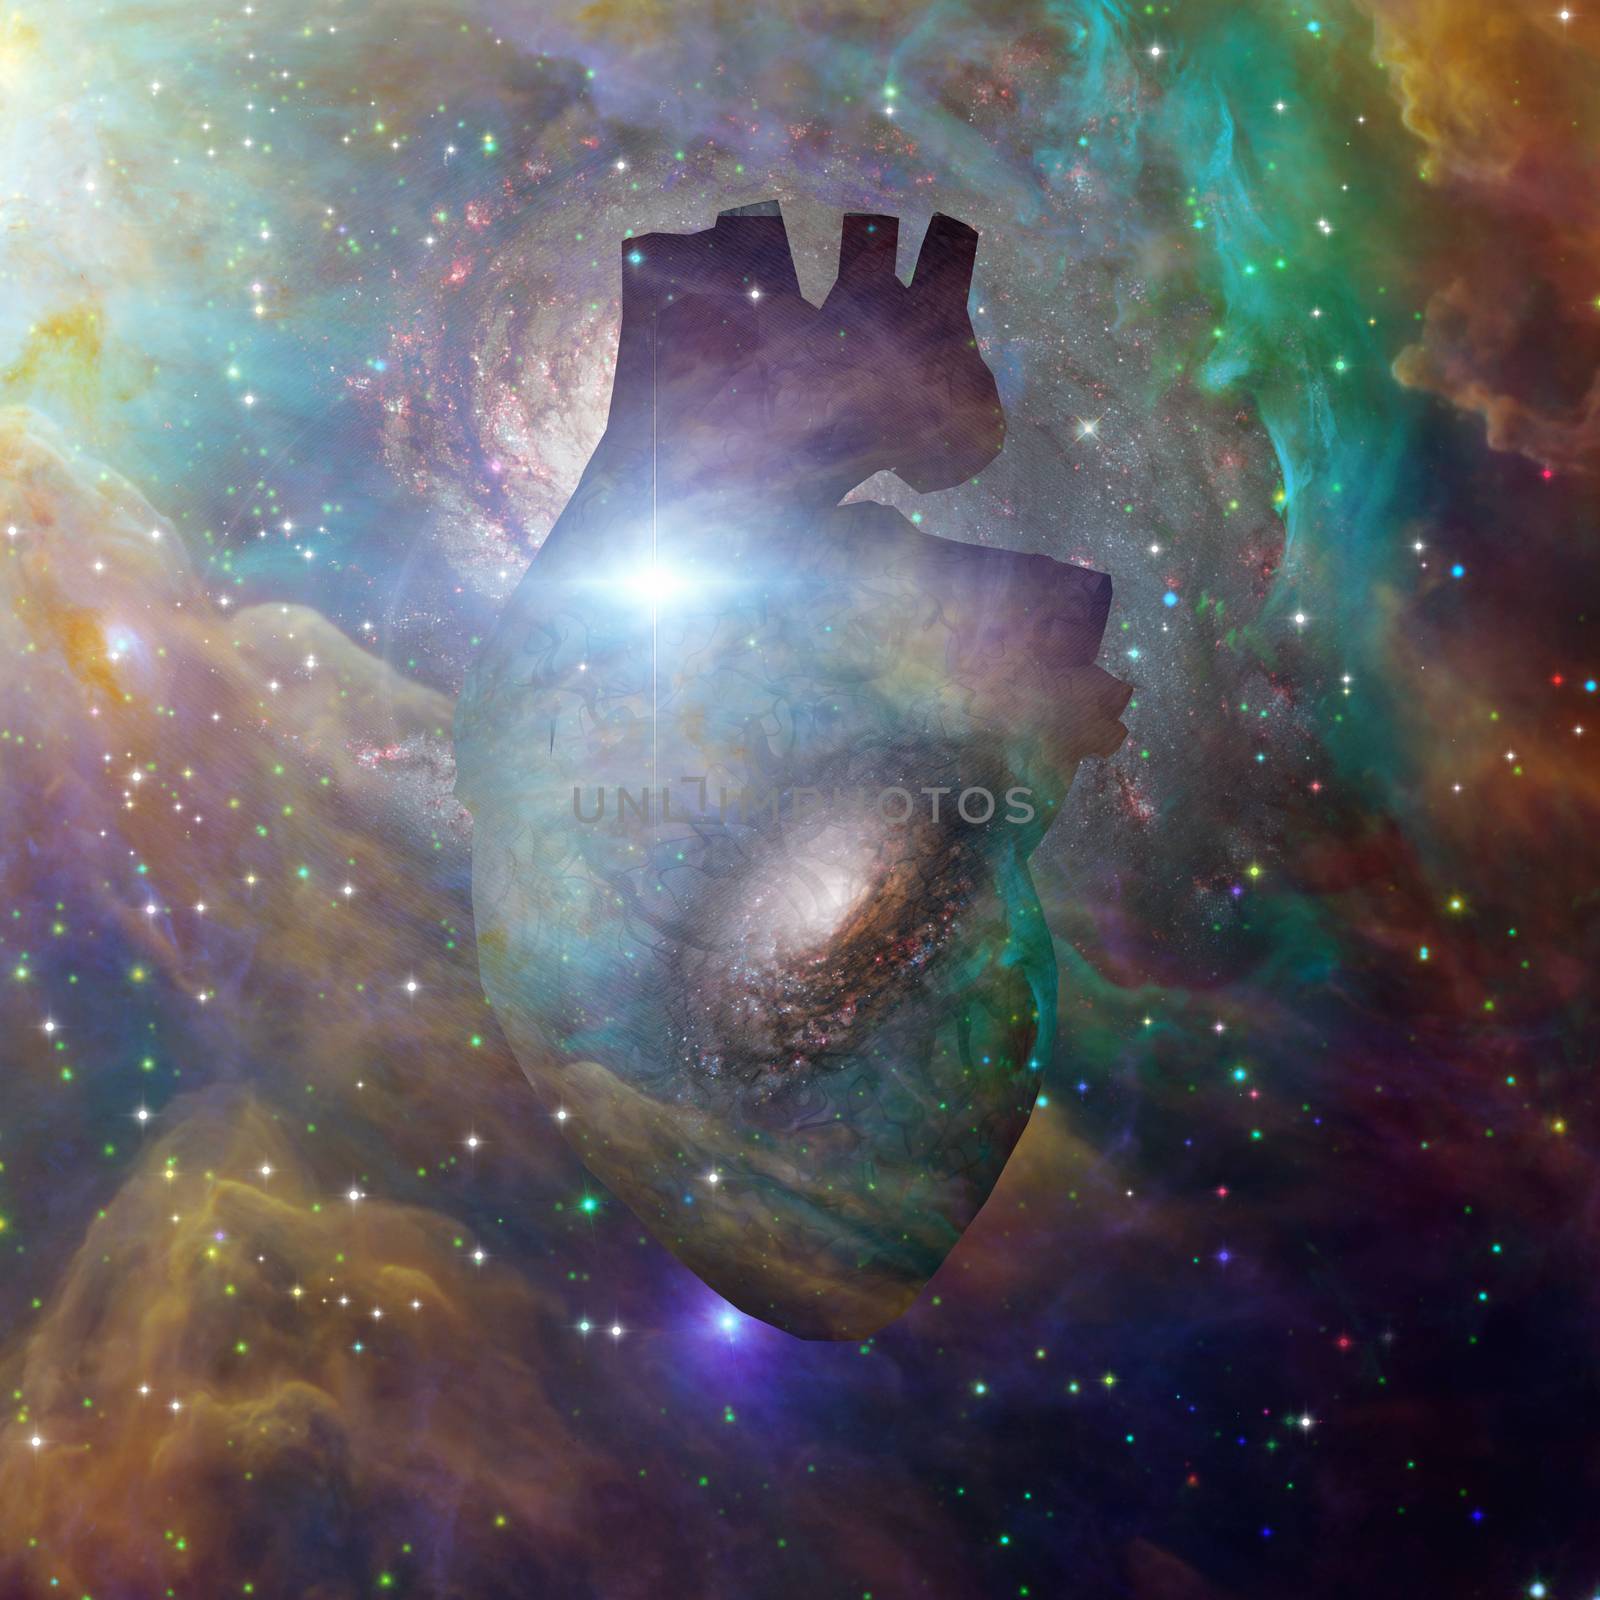 Interstellar Heart by applesstock